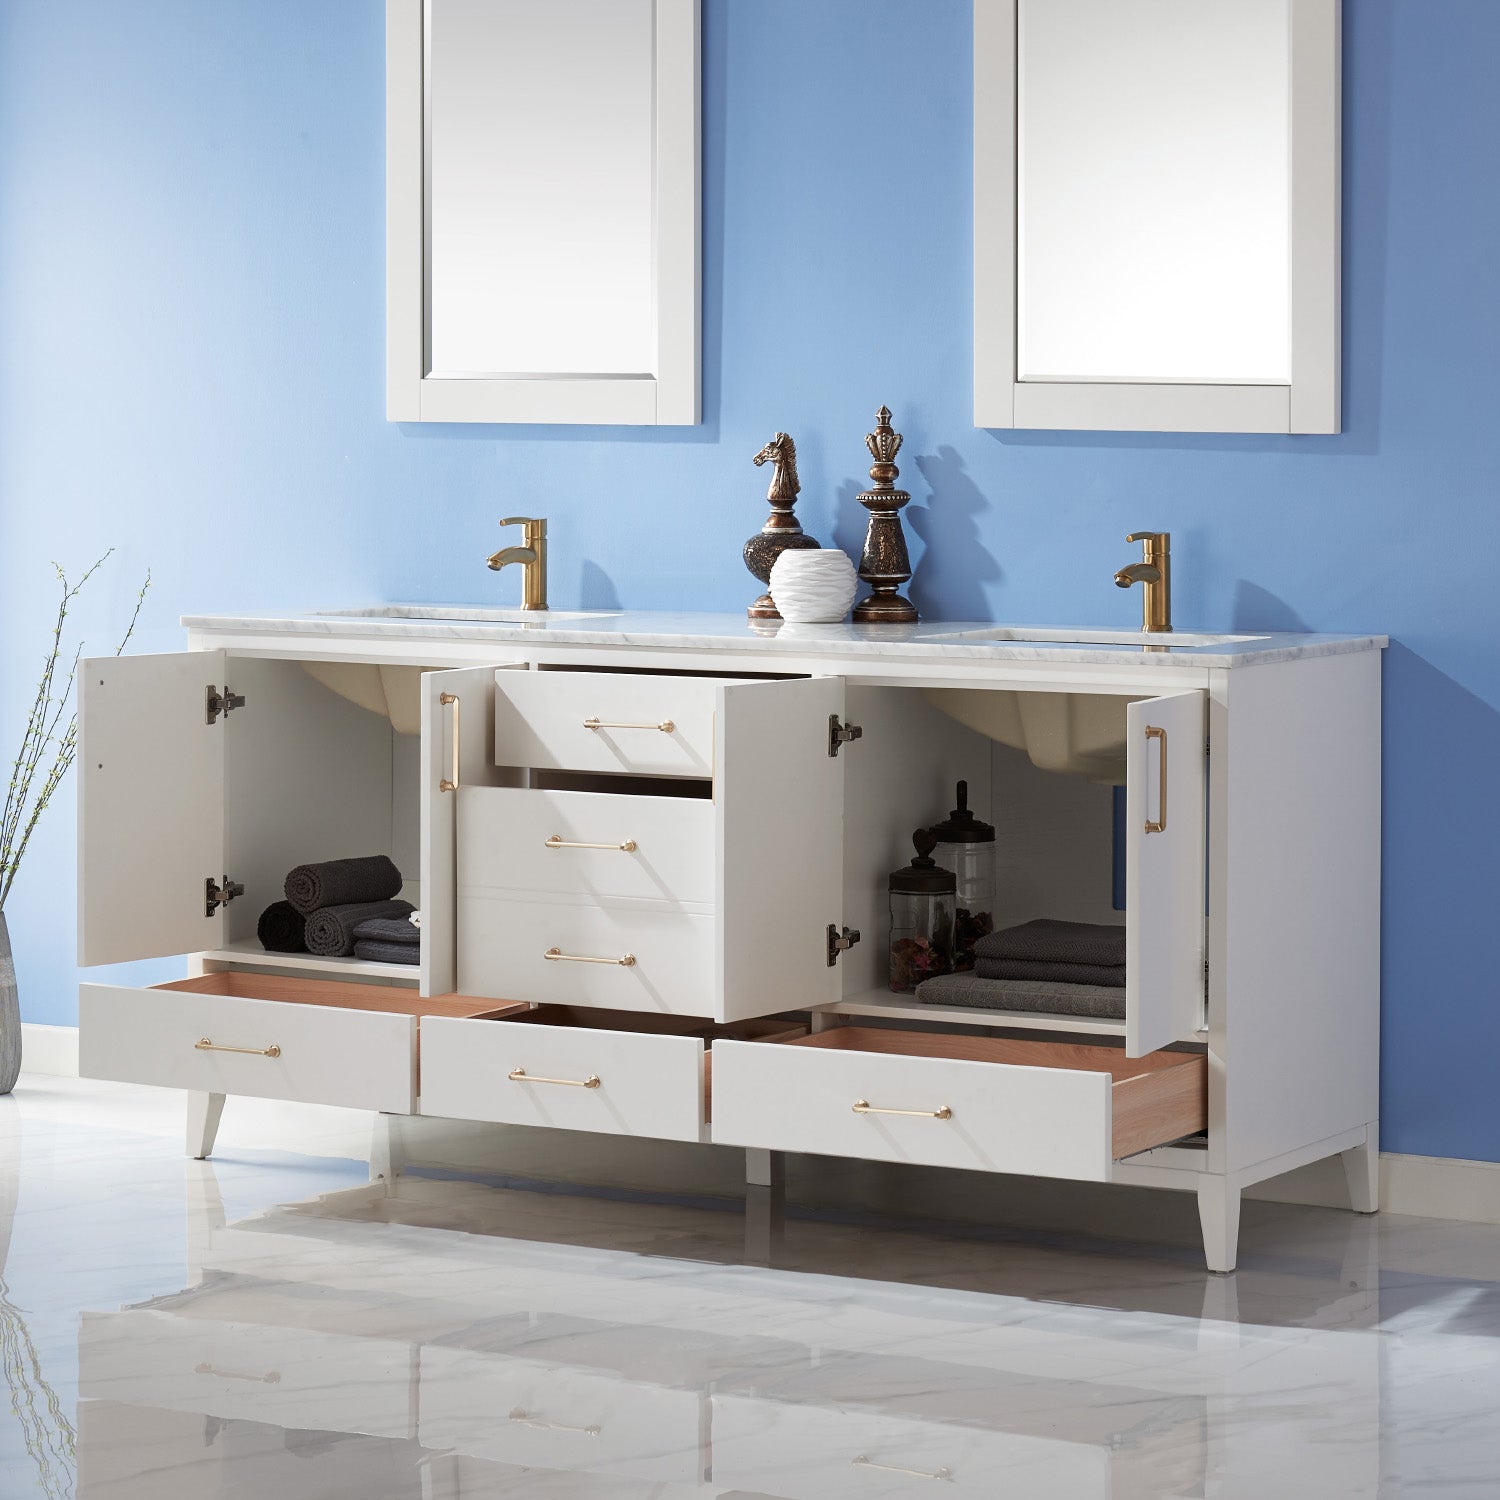 Sutton 72" Double Bathroom Vanity Set with Marble Countertop